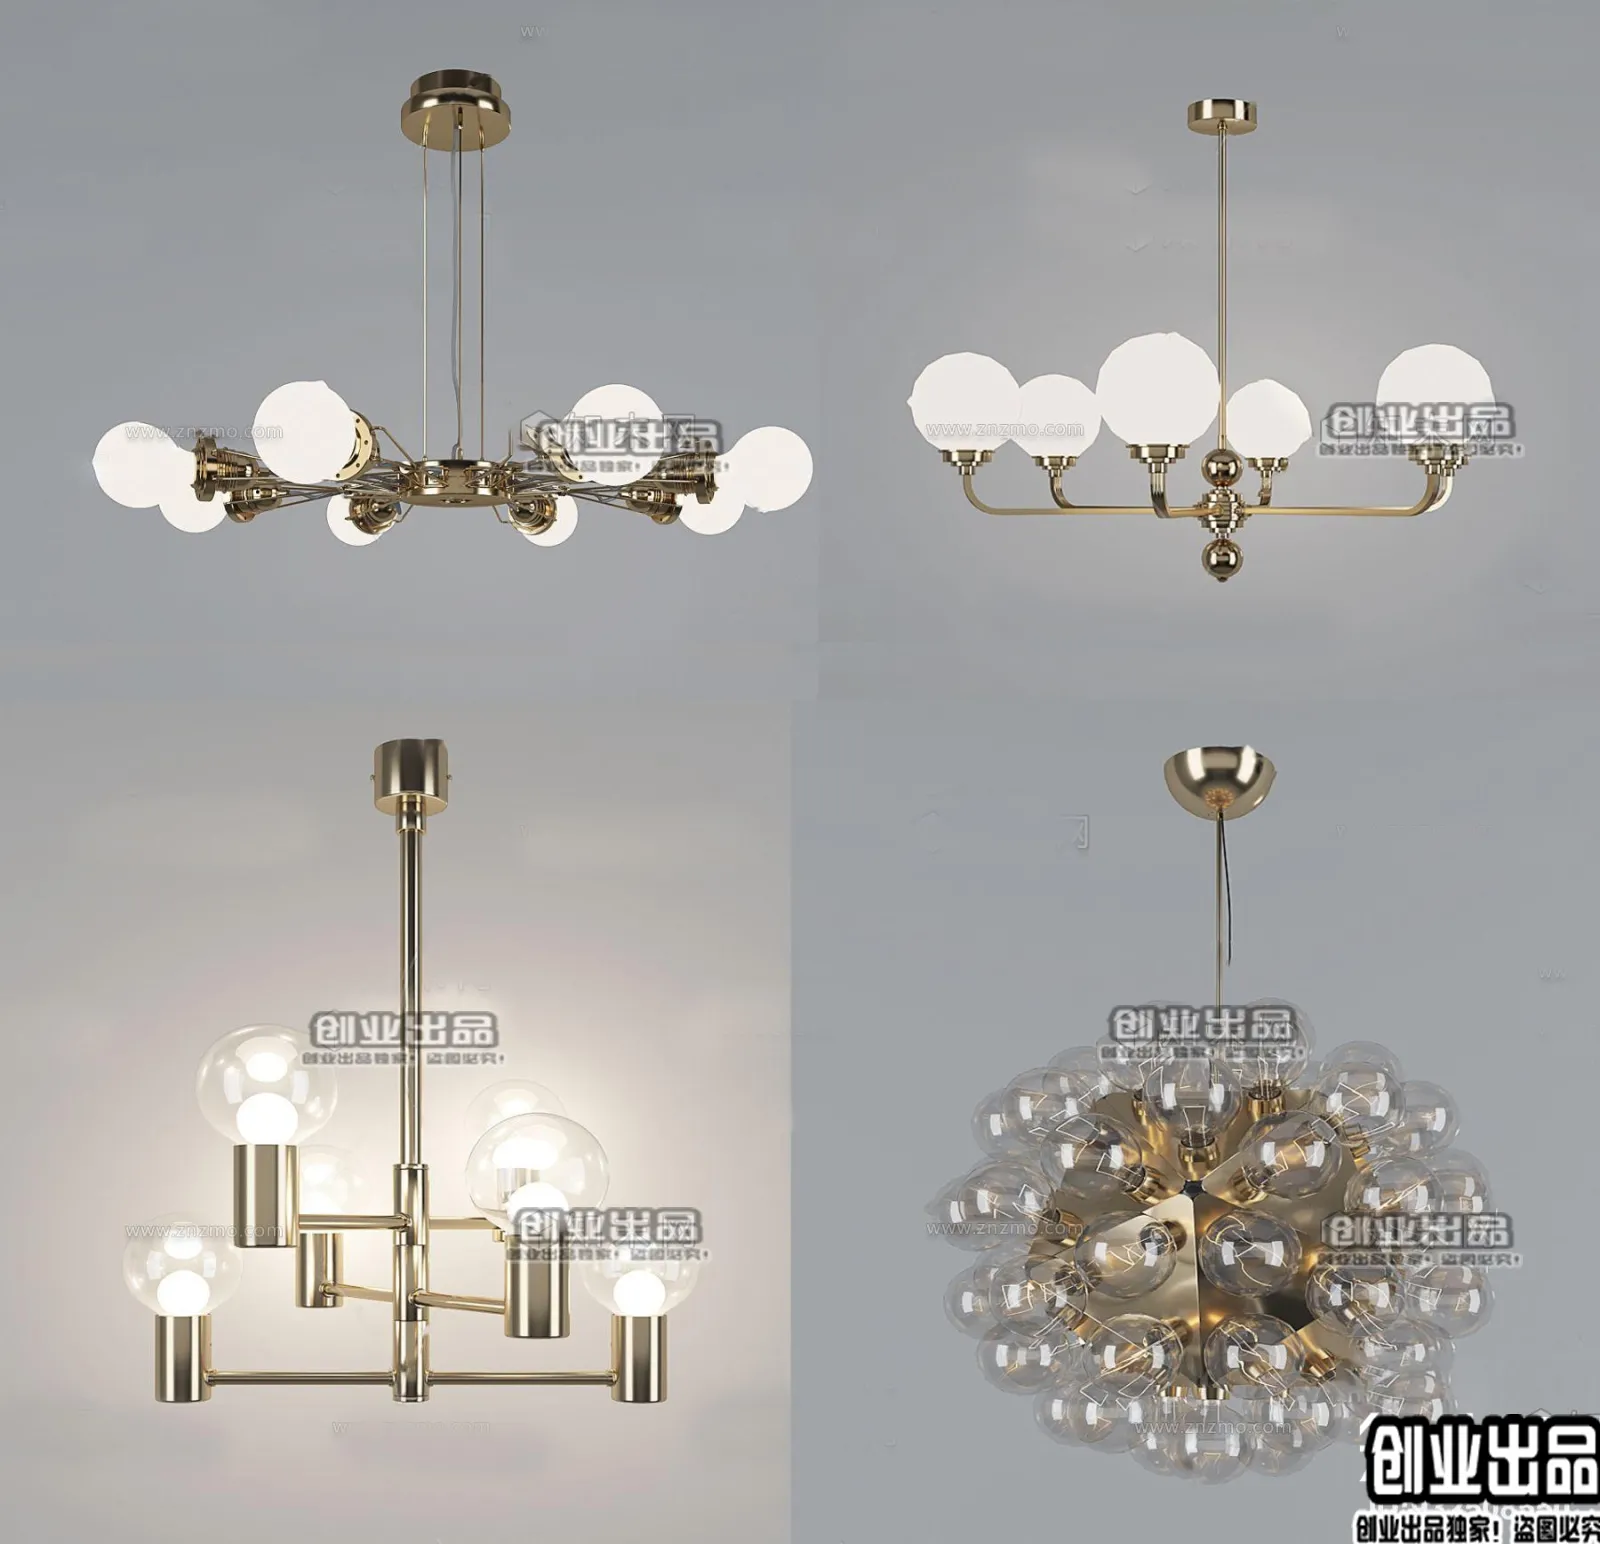 CEILING LAMP – 3D MODELS – 061